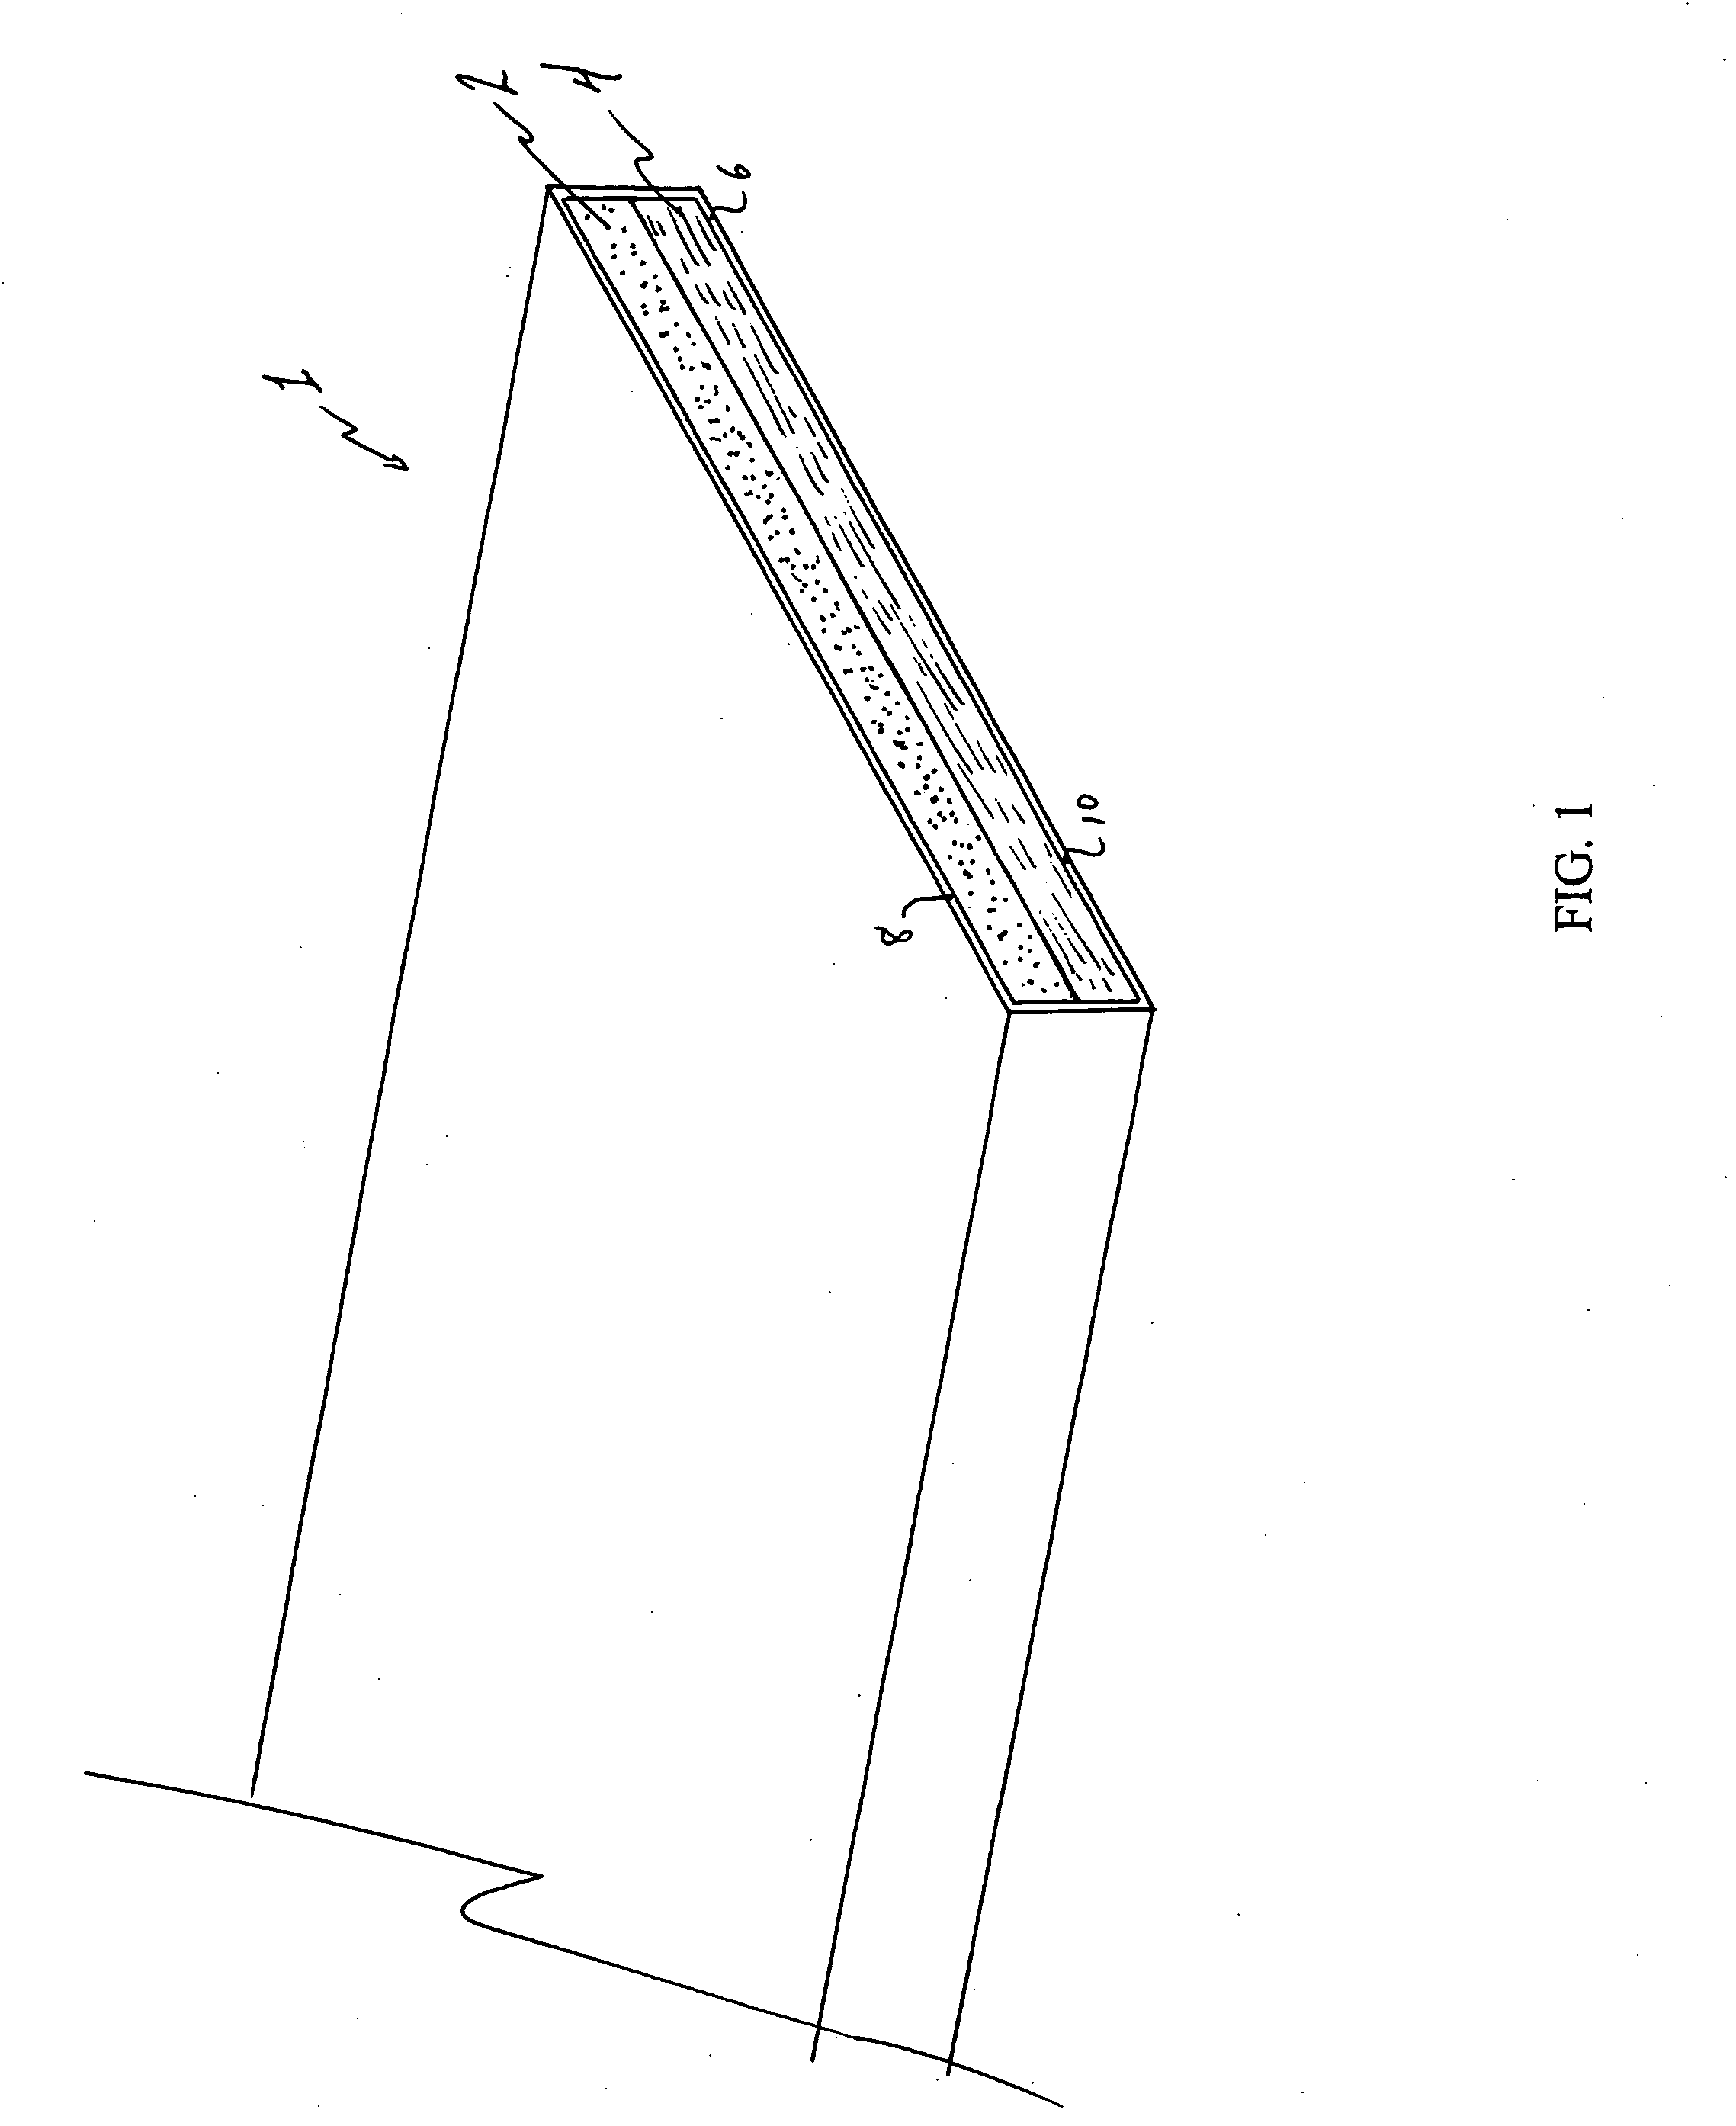 Oriented needled felt conveyor belt